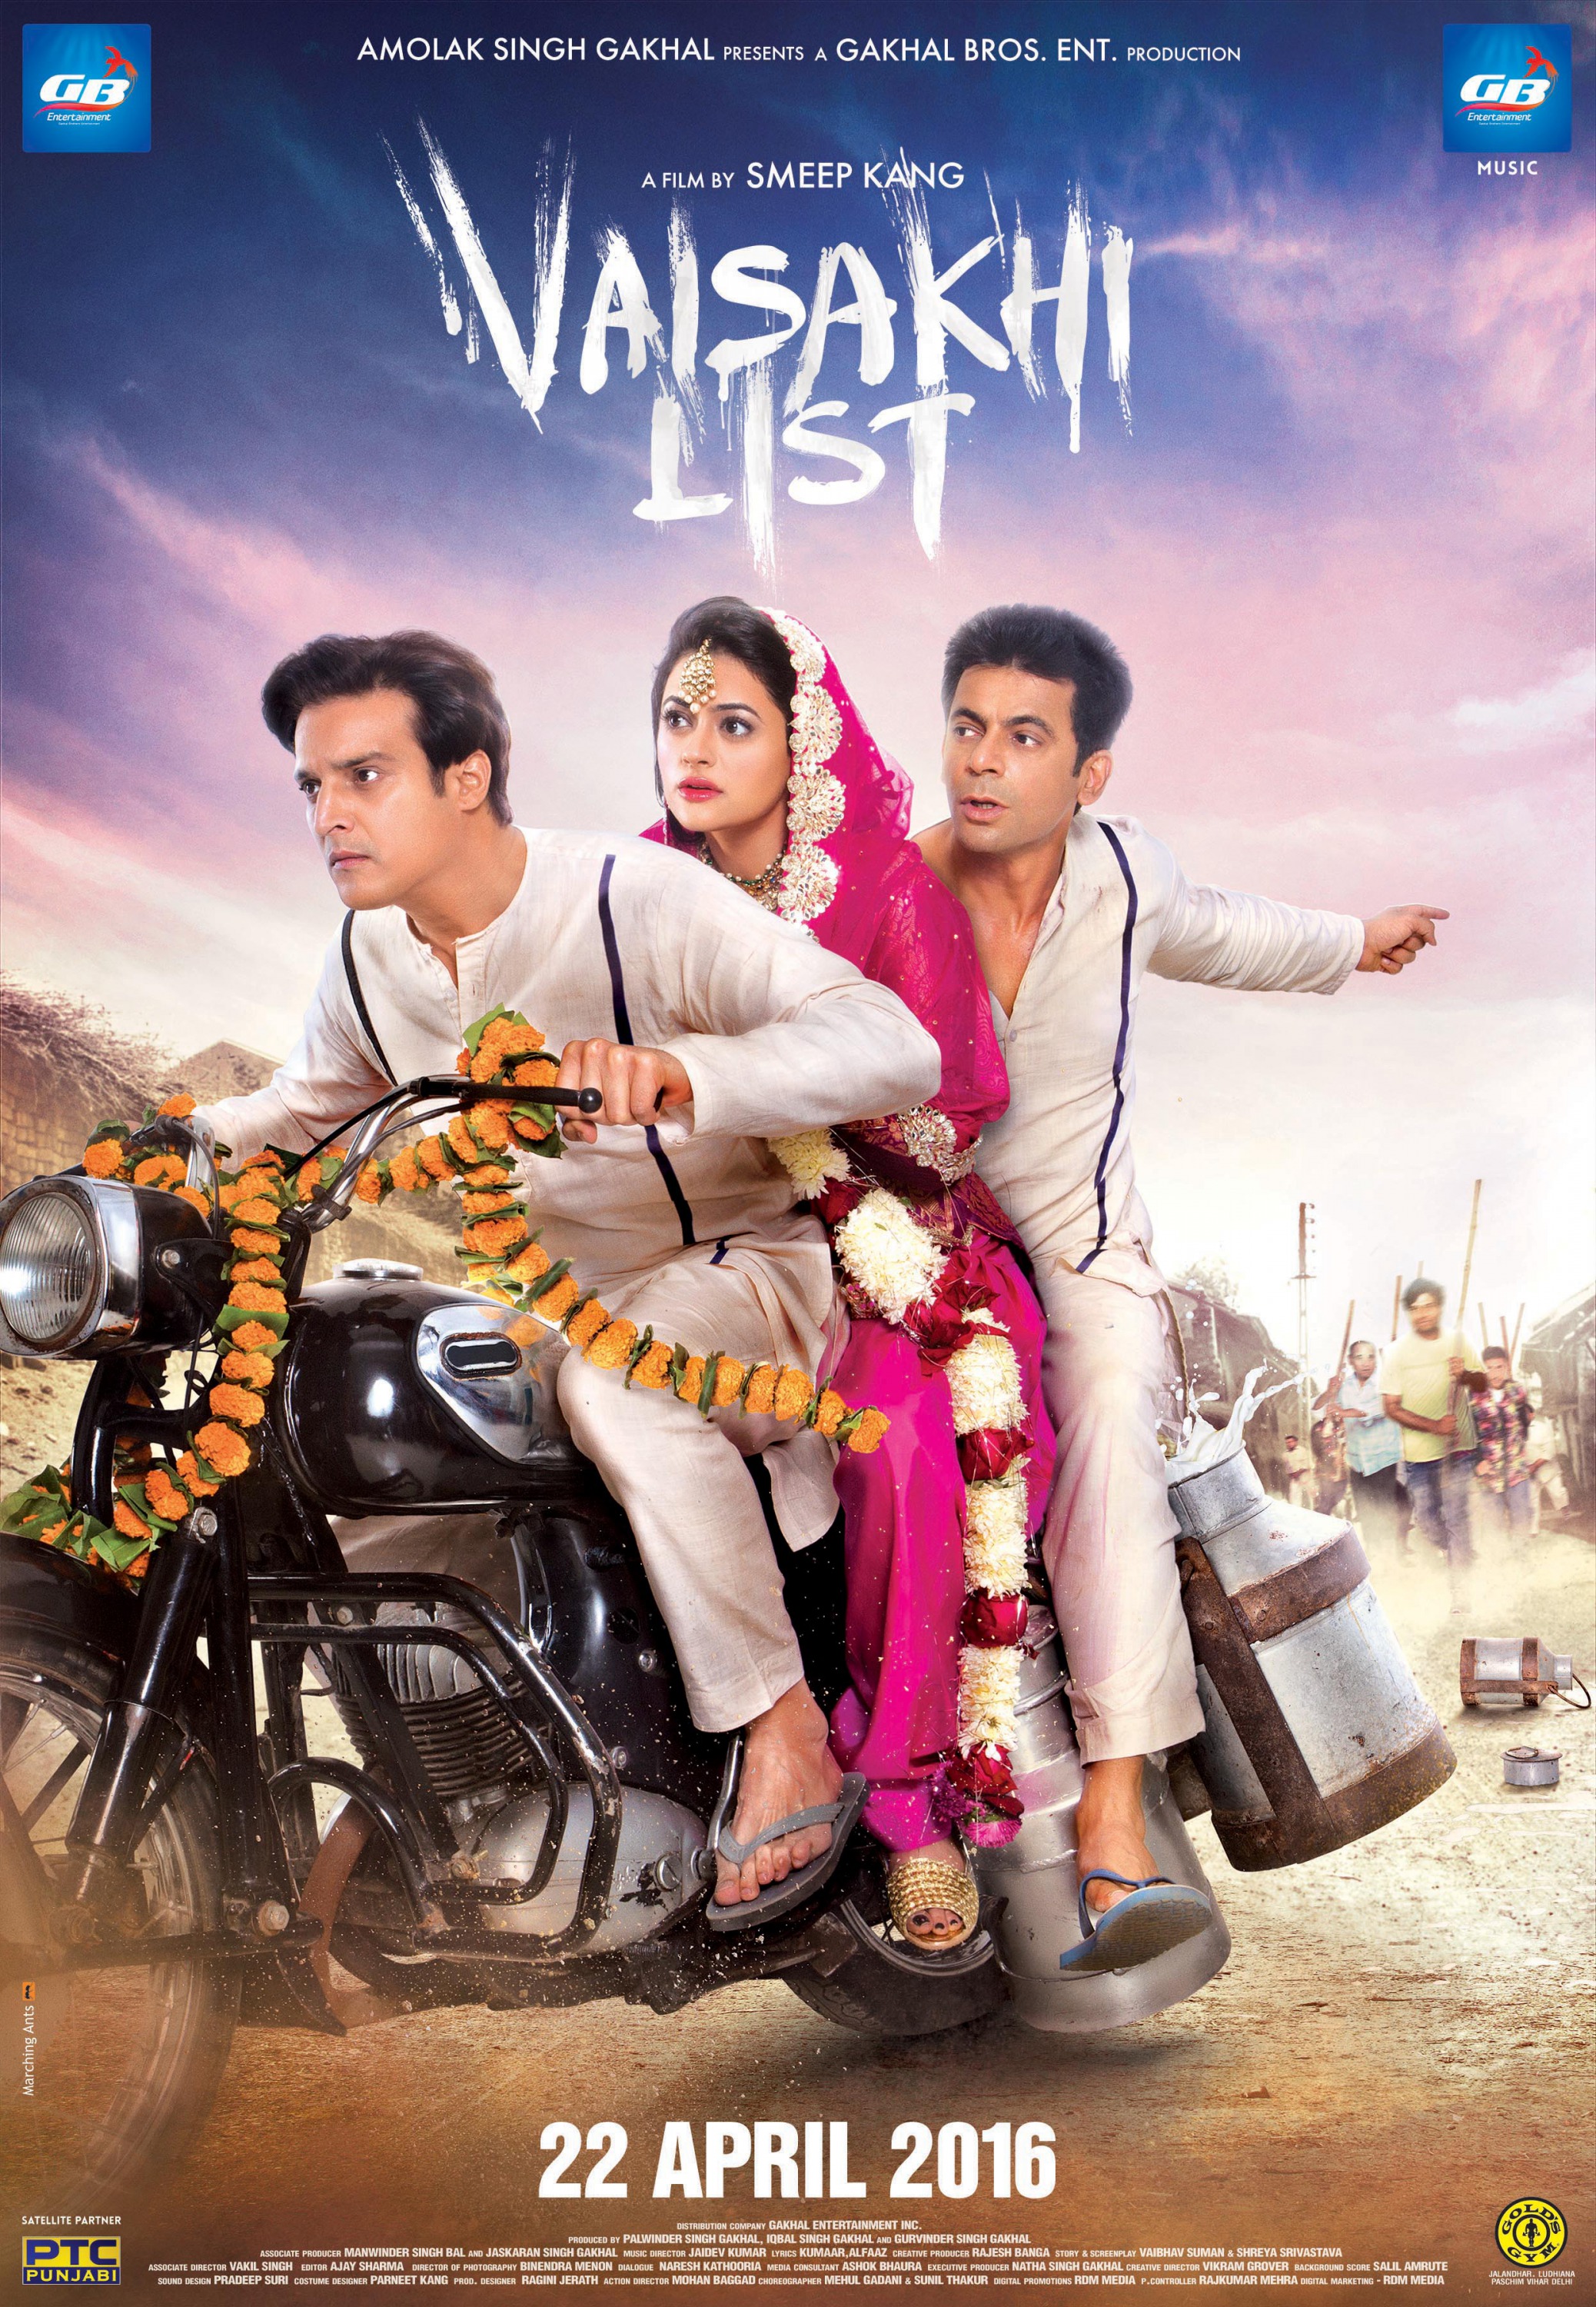 Mega Sized Movie Poster Image for Vaisakhi List (#3 of 6)